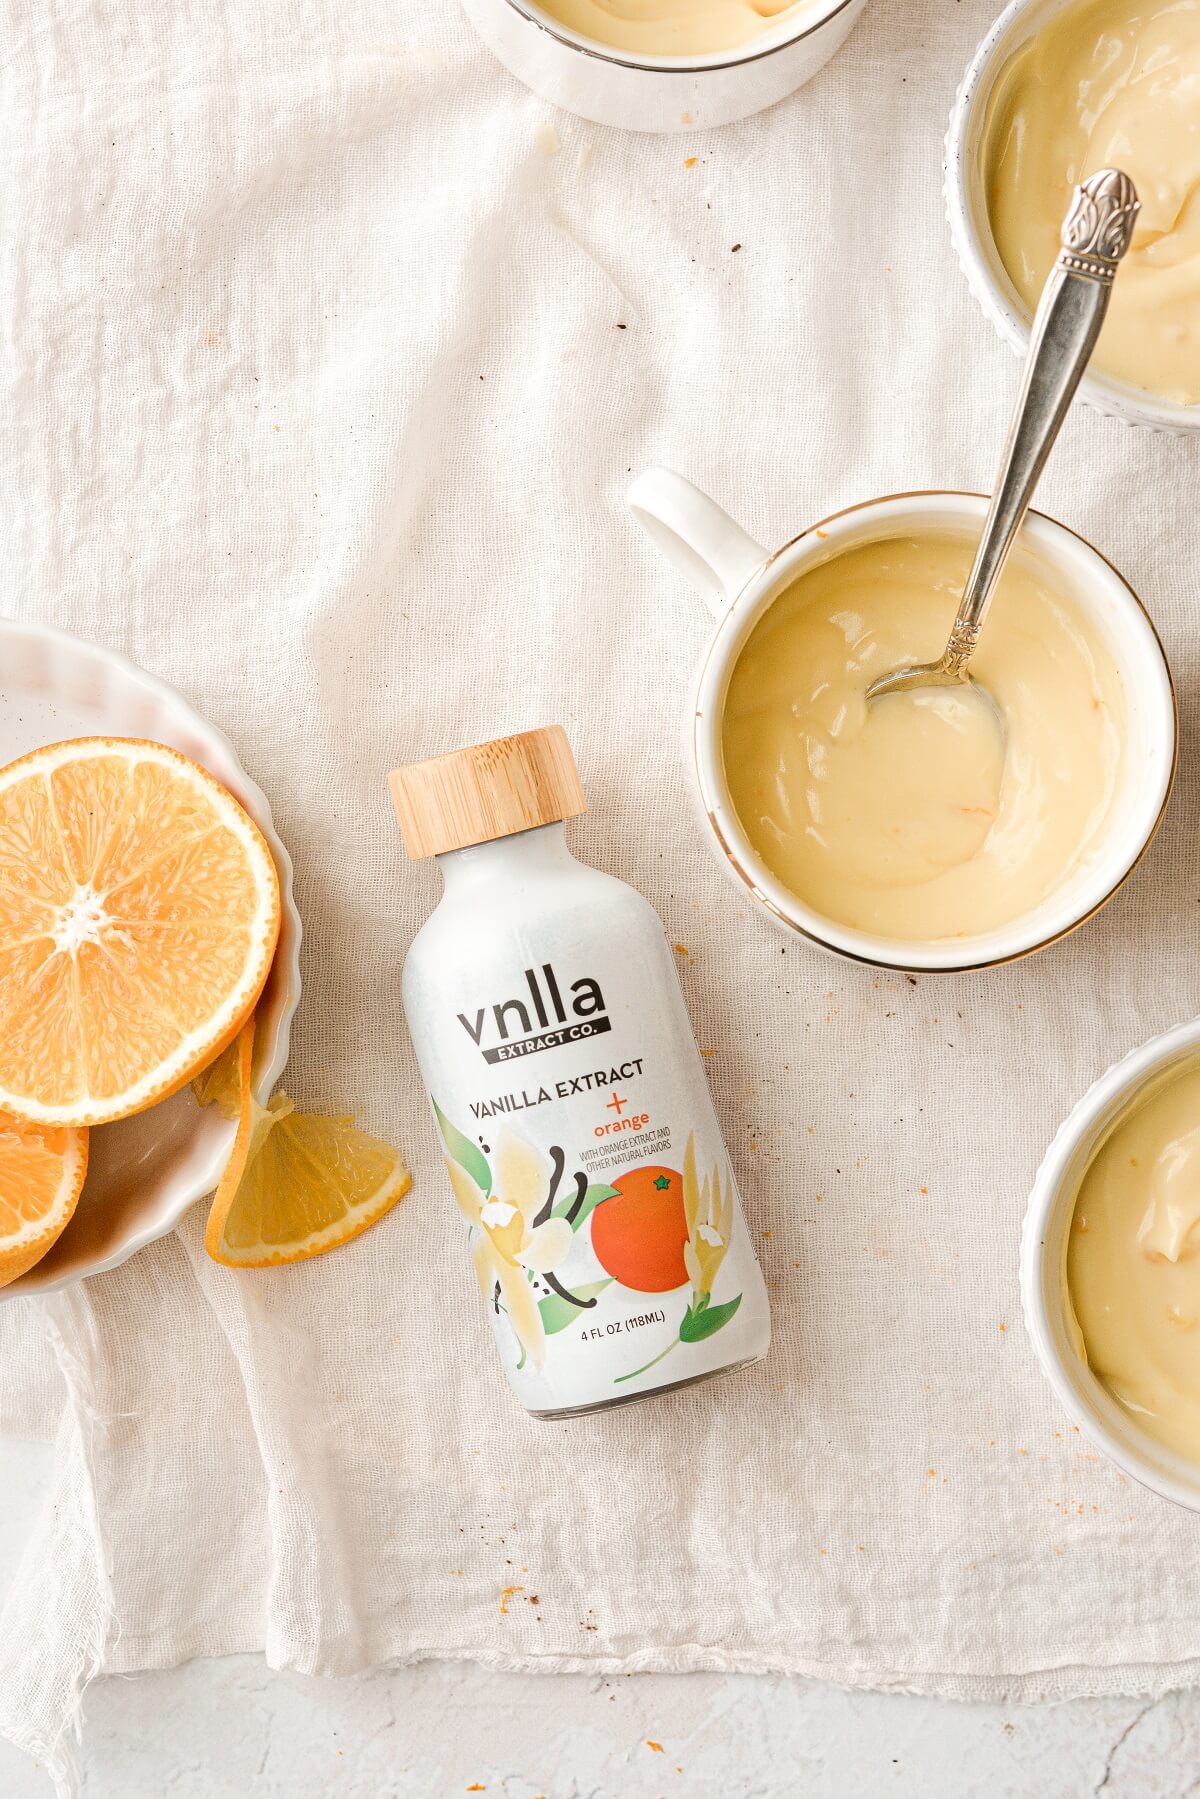 Ramekins of orange vanilla custard, with a bottle of vanilla extract from vnlla extract company.